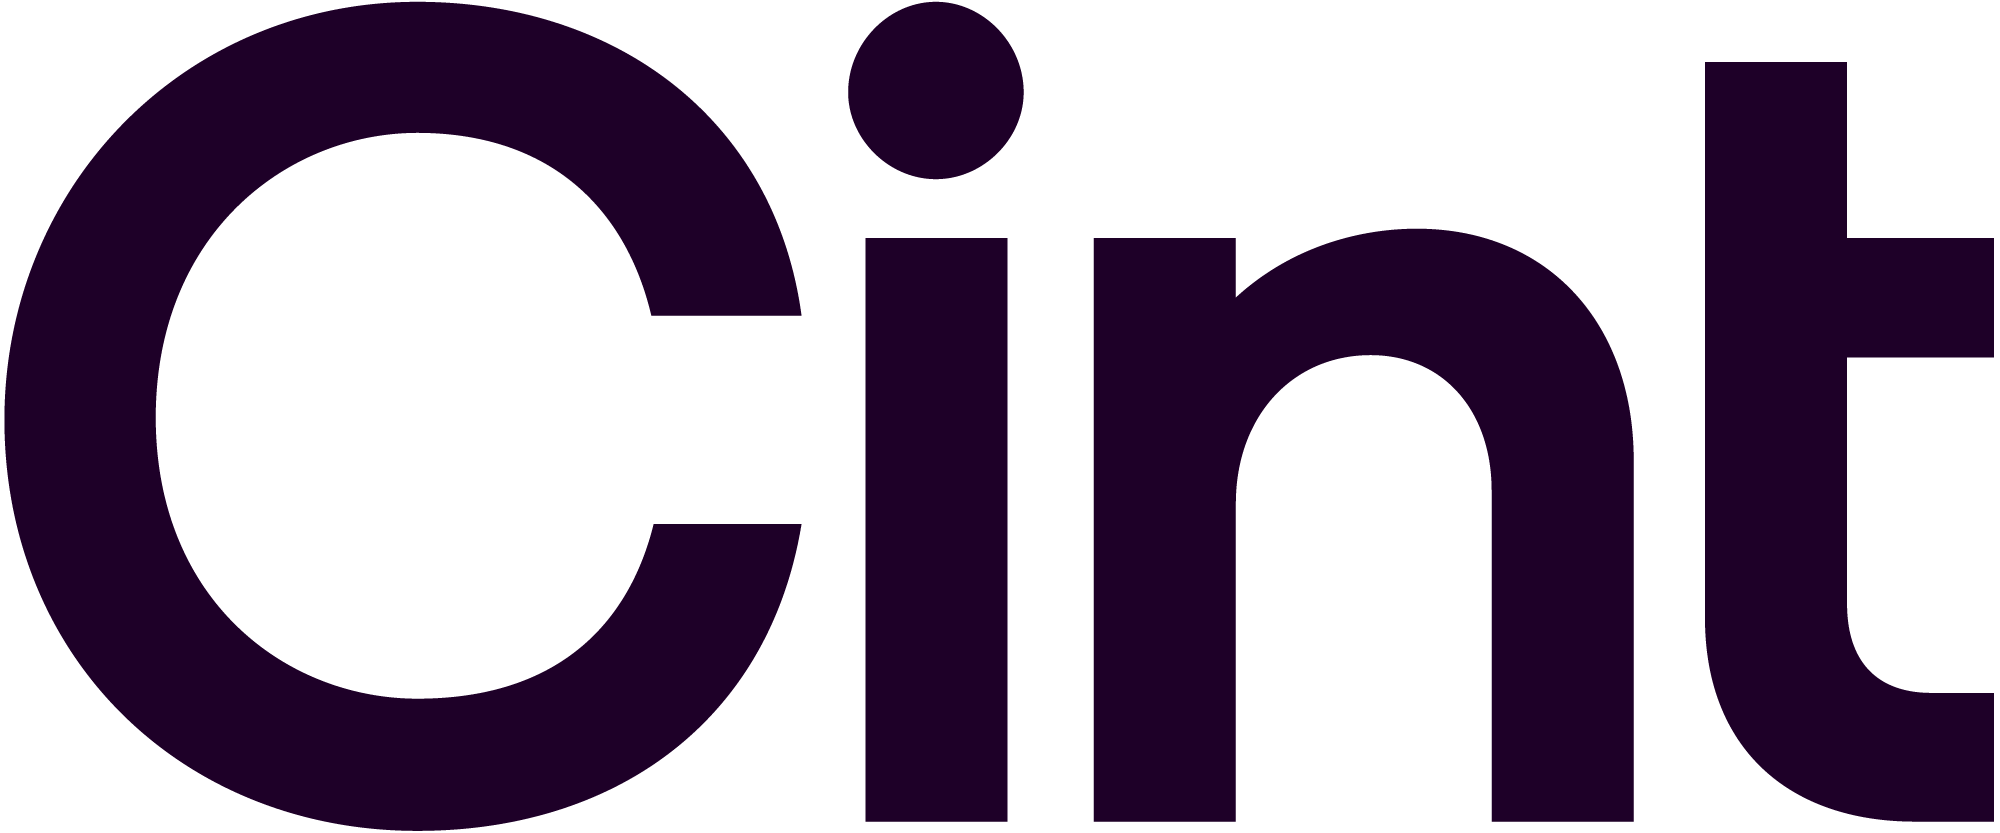 Company logo for Cint